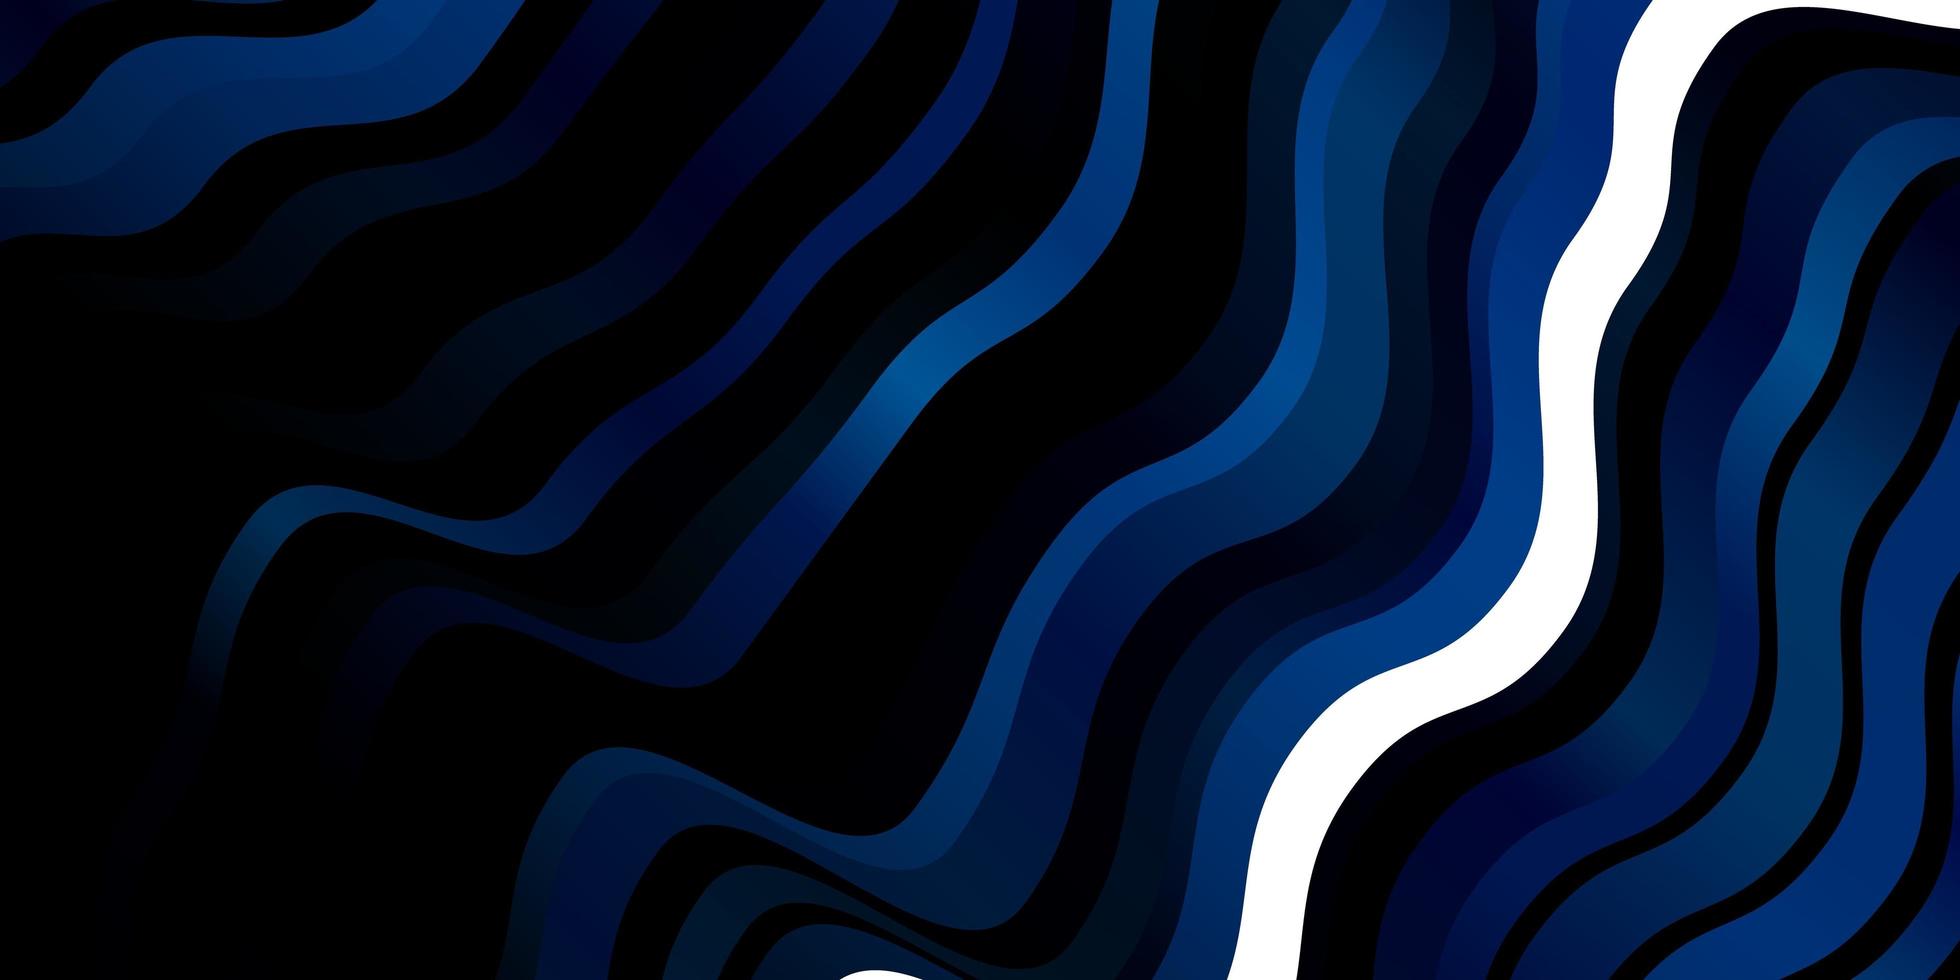 Dark BLUE vector backdrop with bent lines